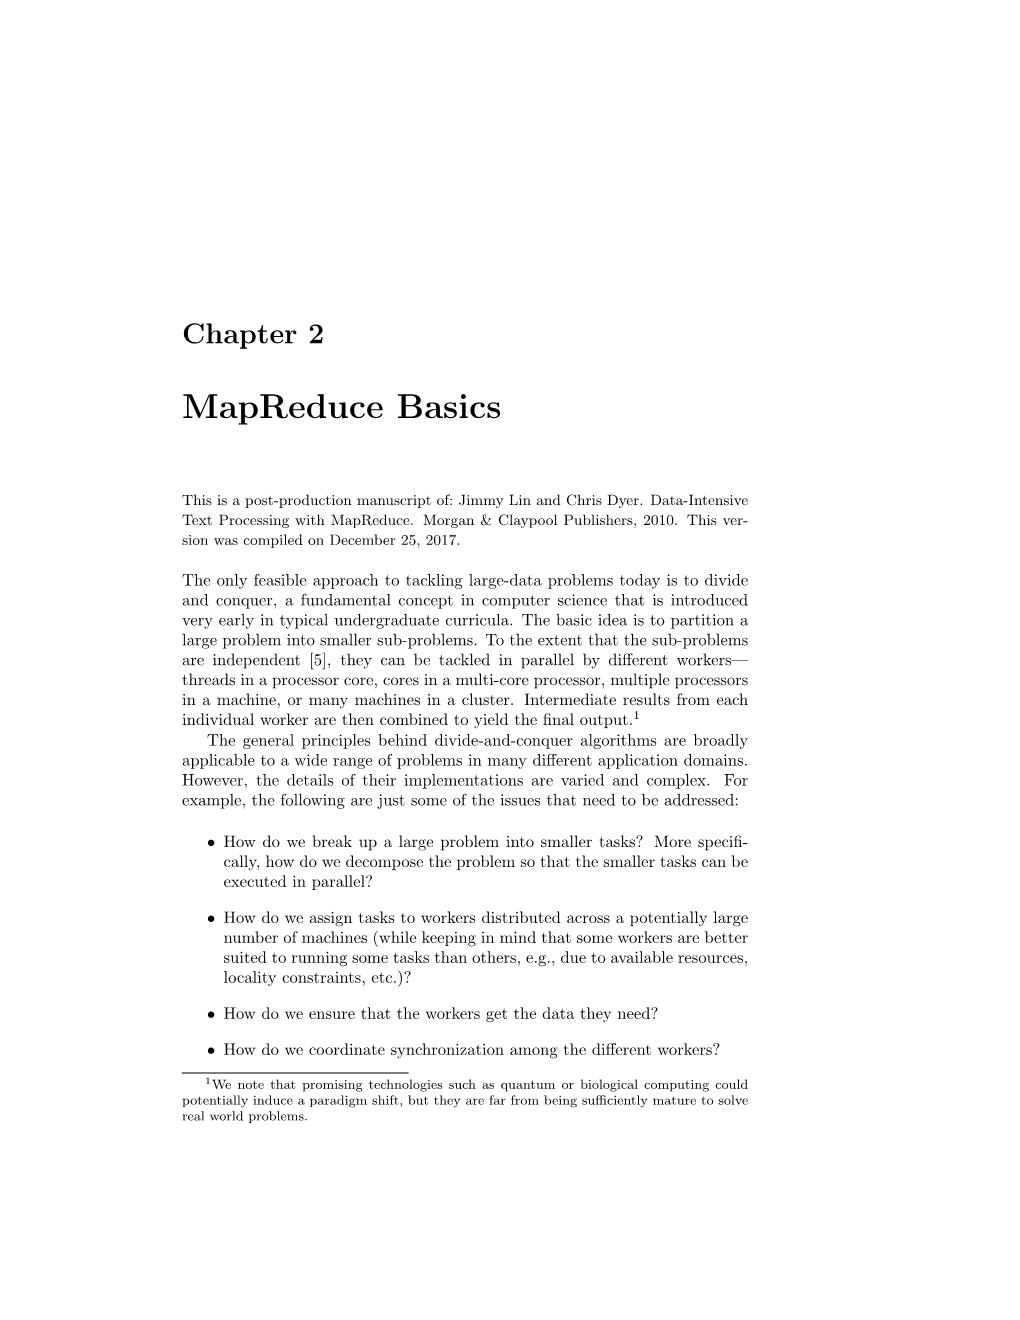 Mapreduce Basics